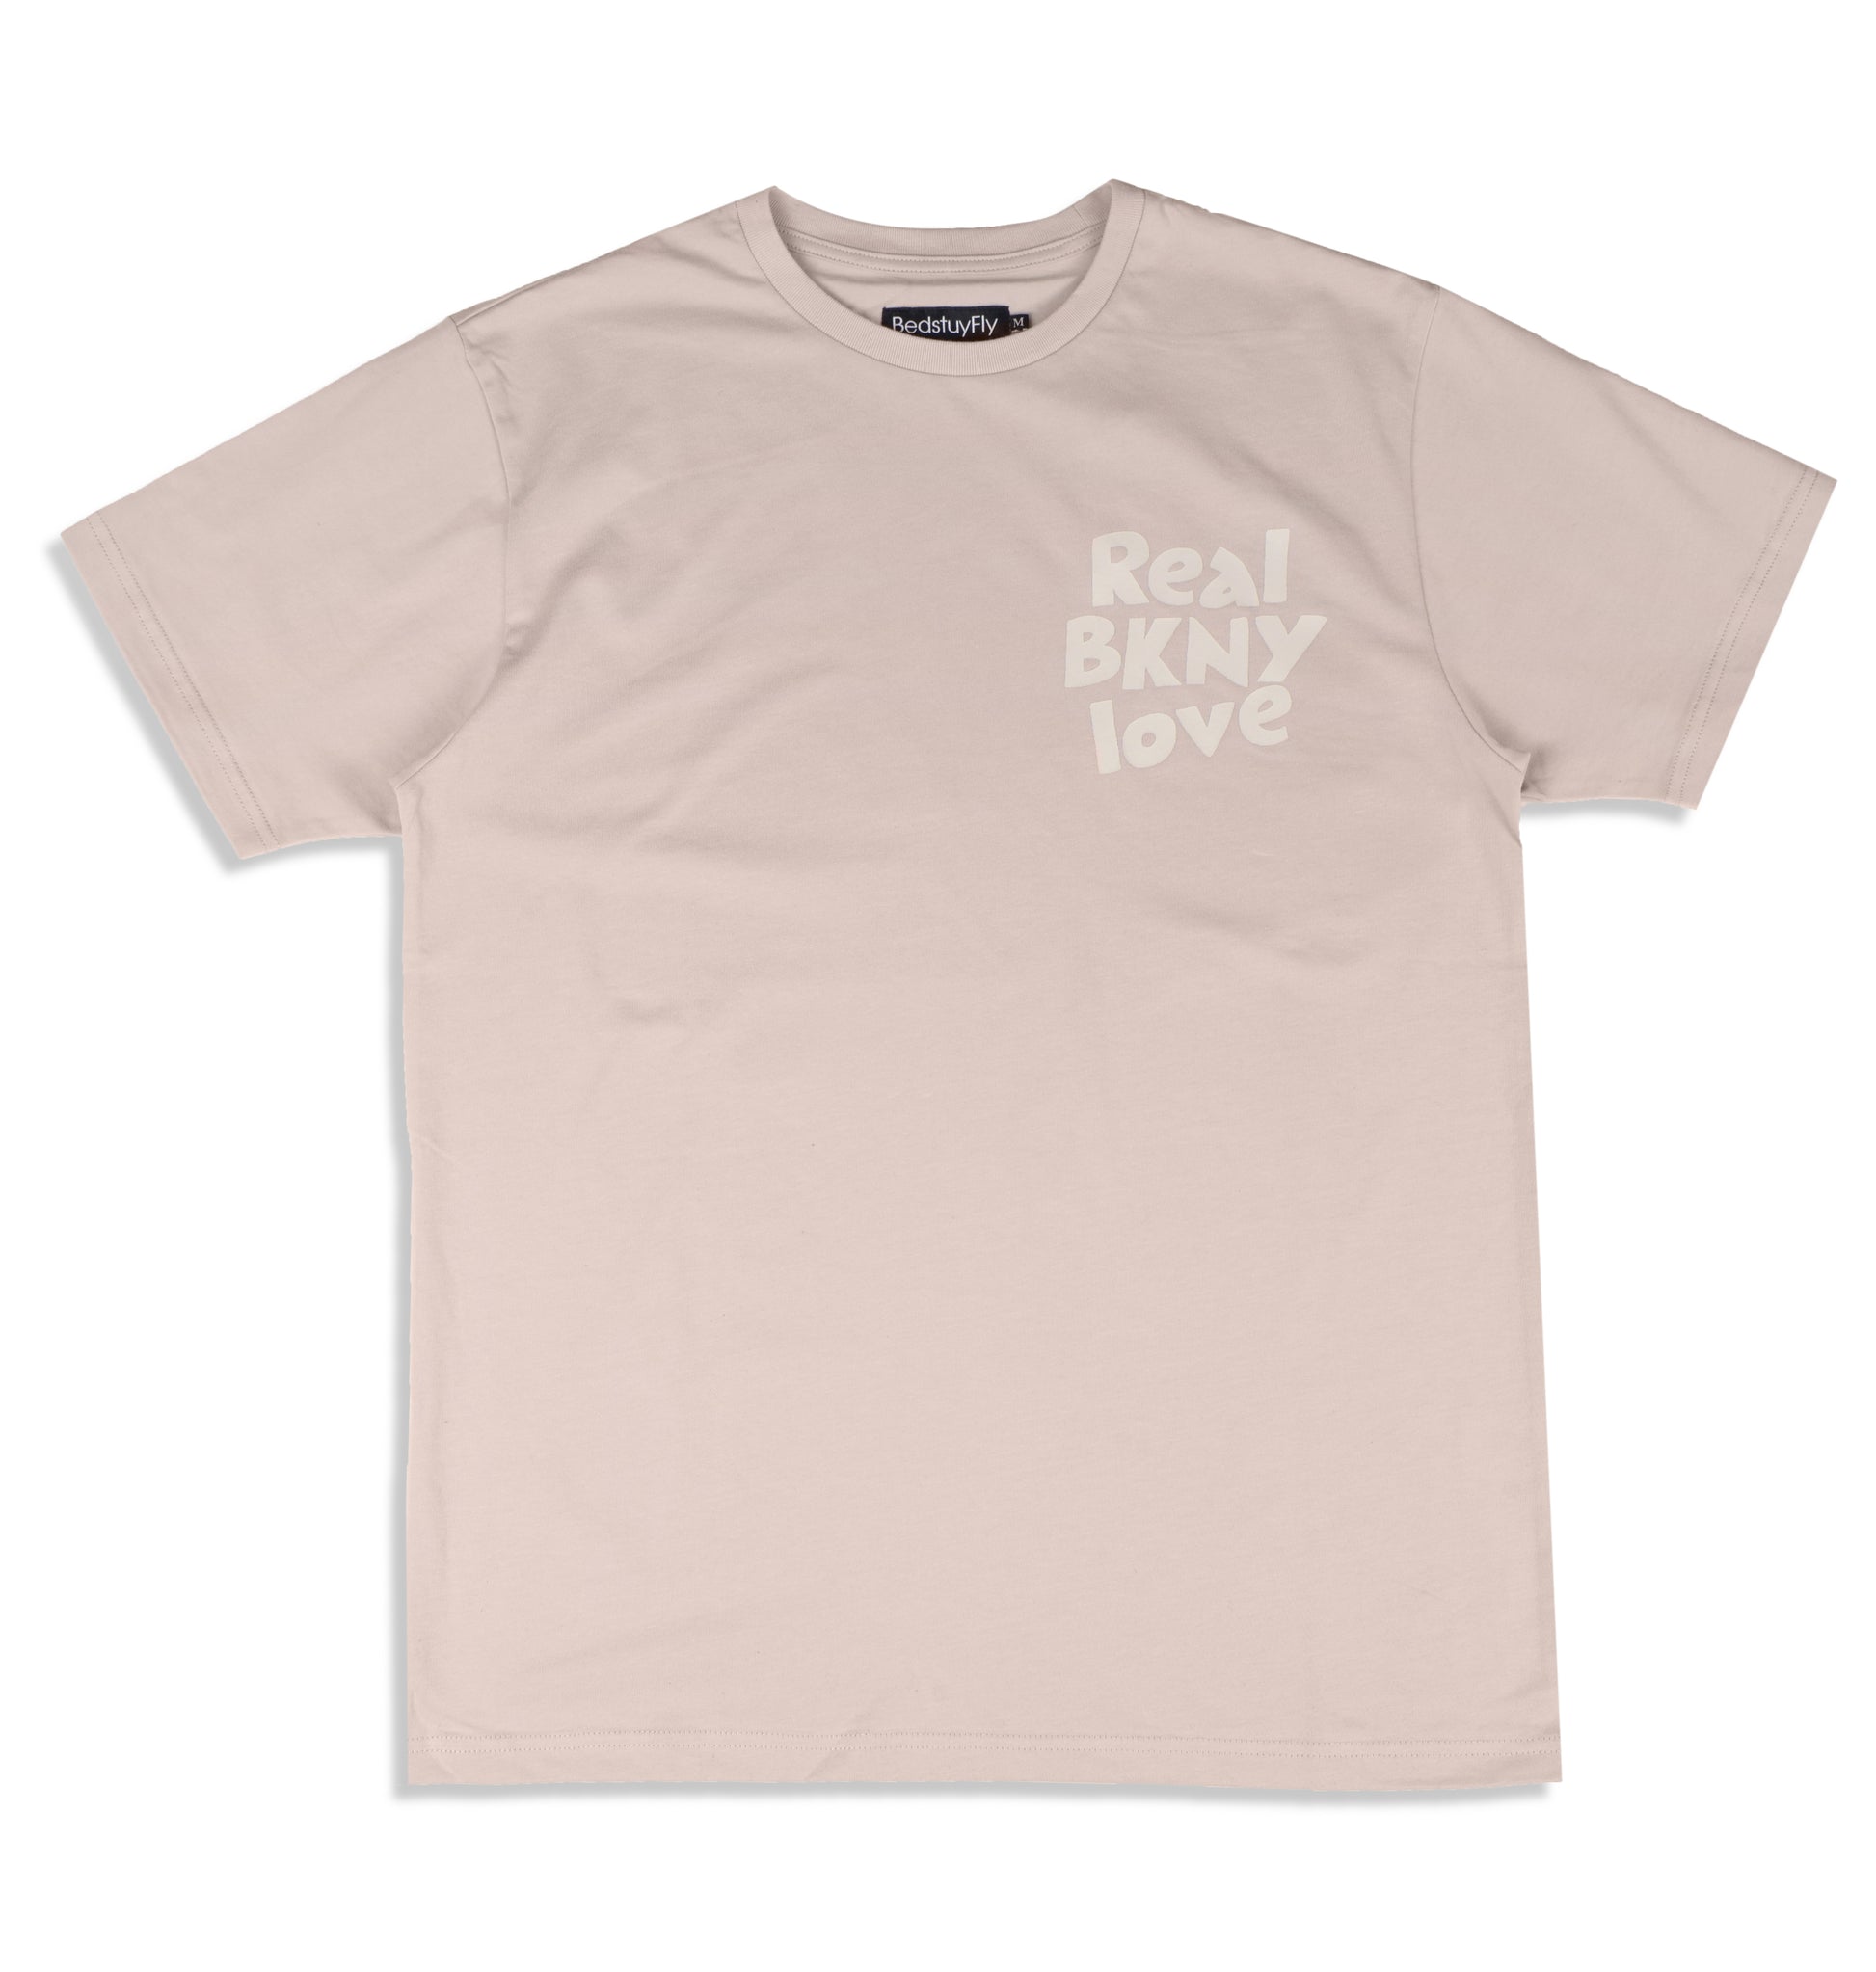 Real BK T-Shirt - Bedstuyfly